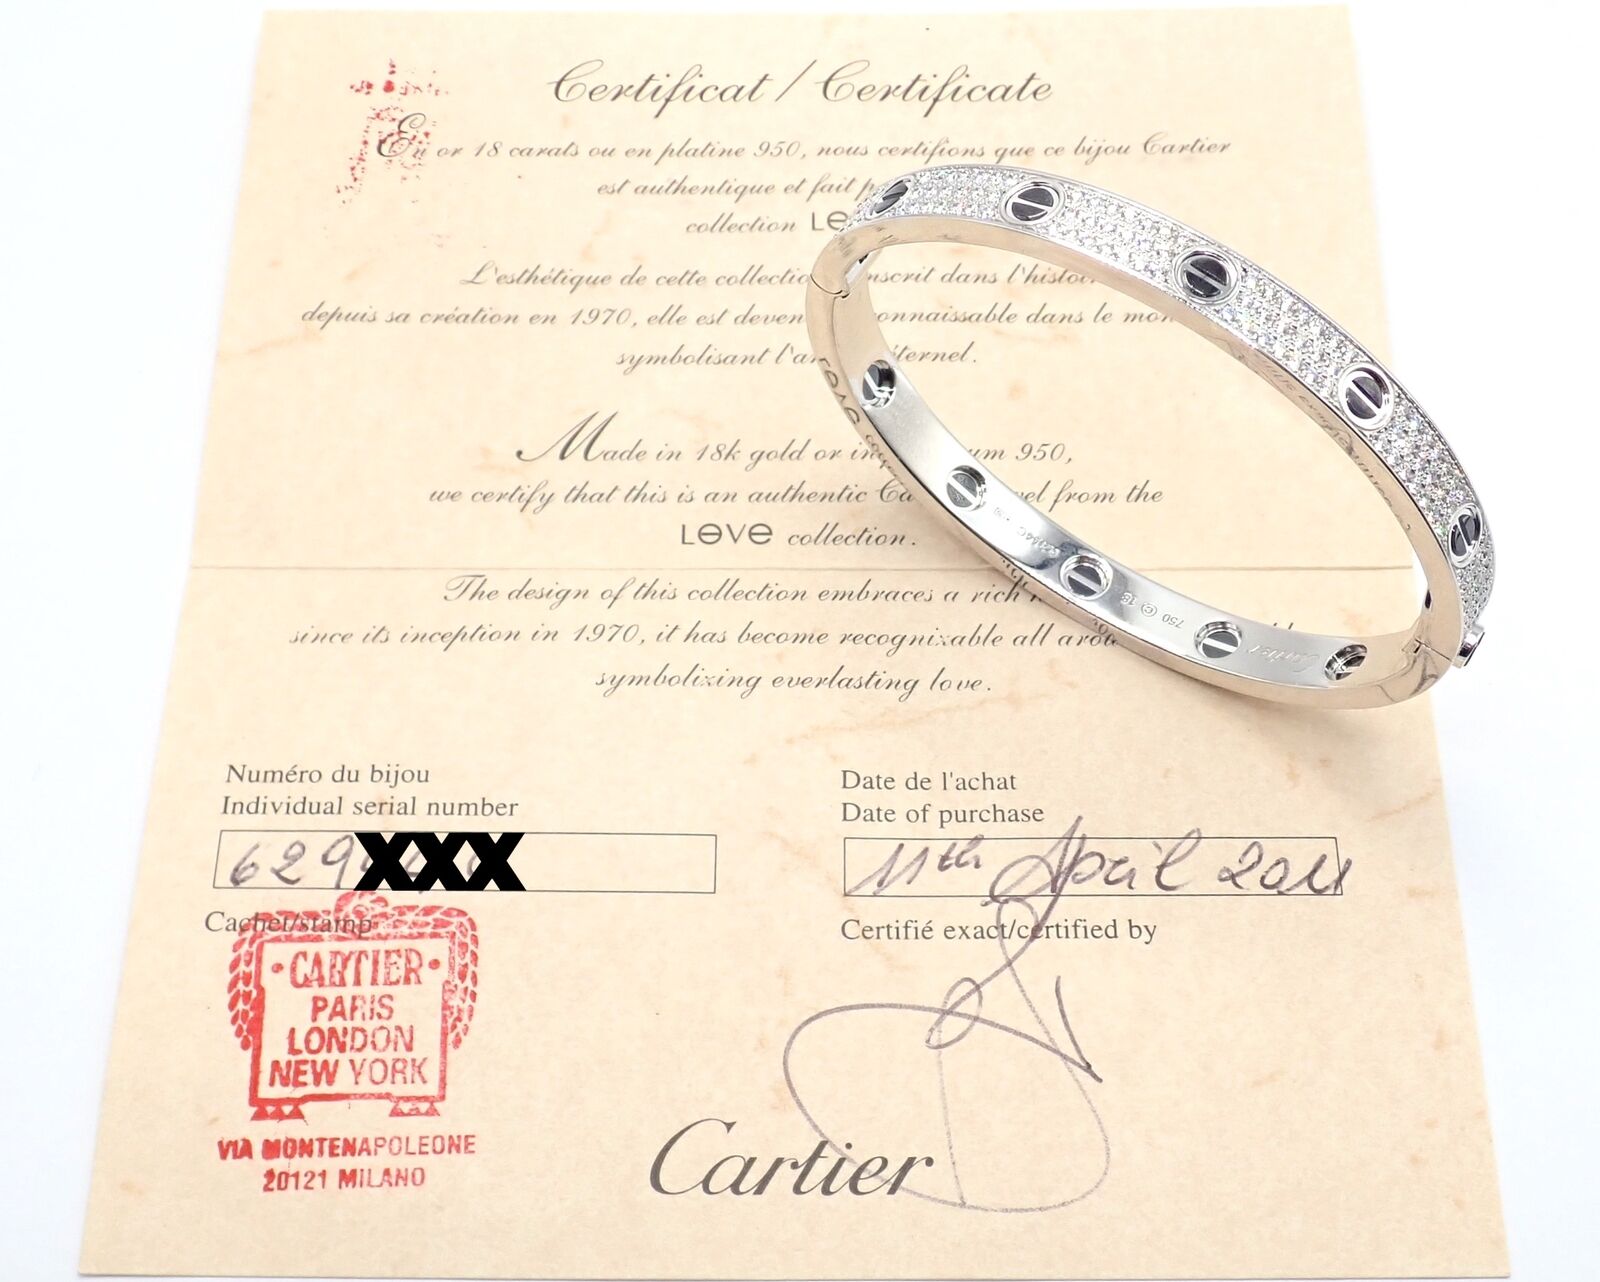 Cartier White Gold and Diamond Love Bangle Bracelet, Vintage Jewelry